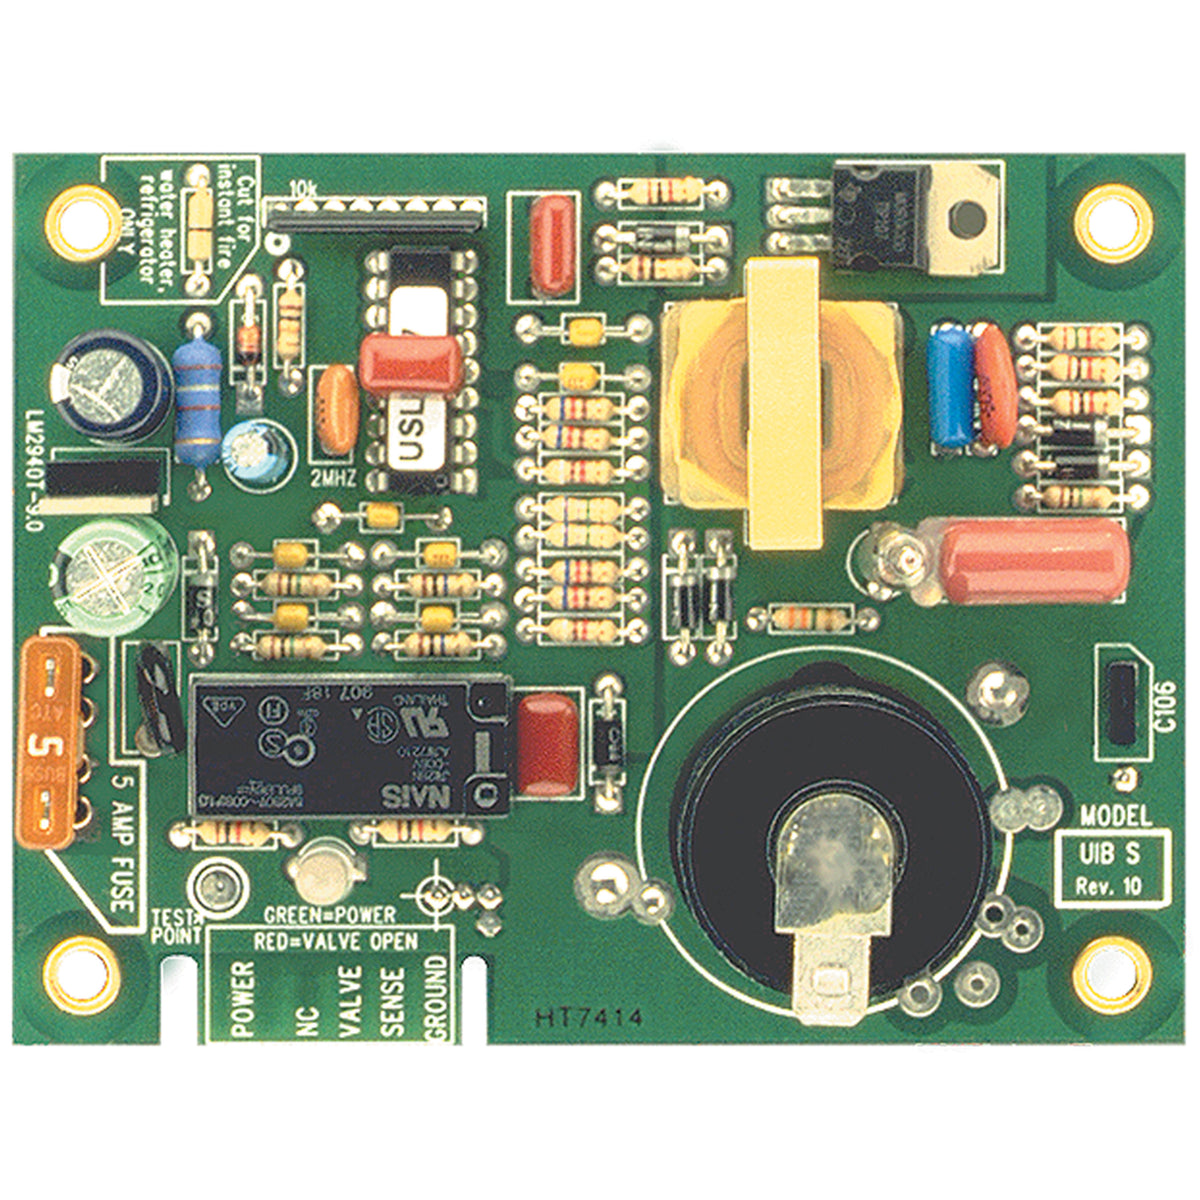 Dinosaur Electronics Ignitor Board - Large, Post UIB L POST